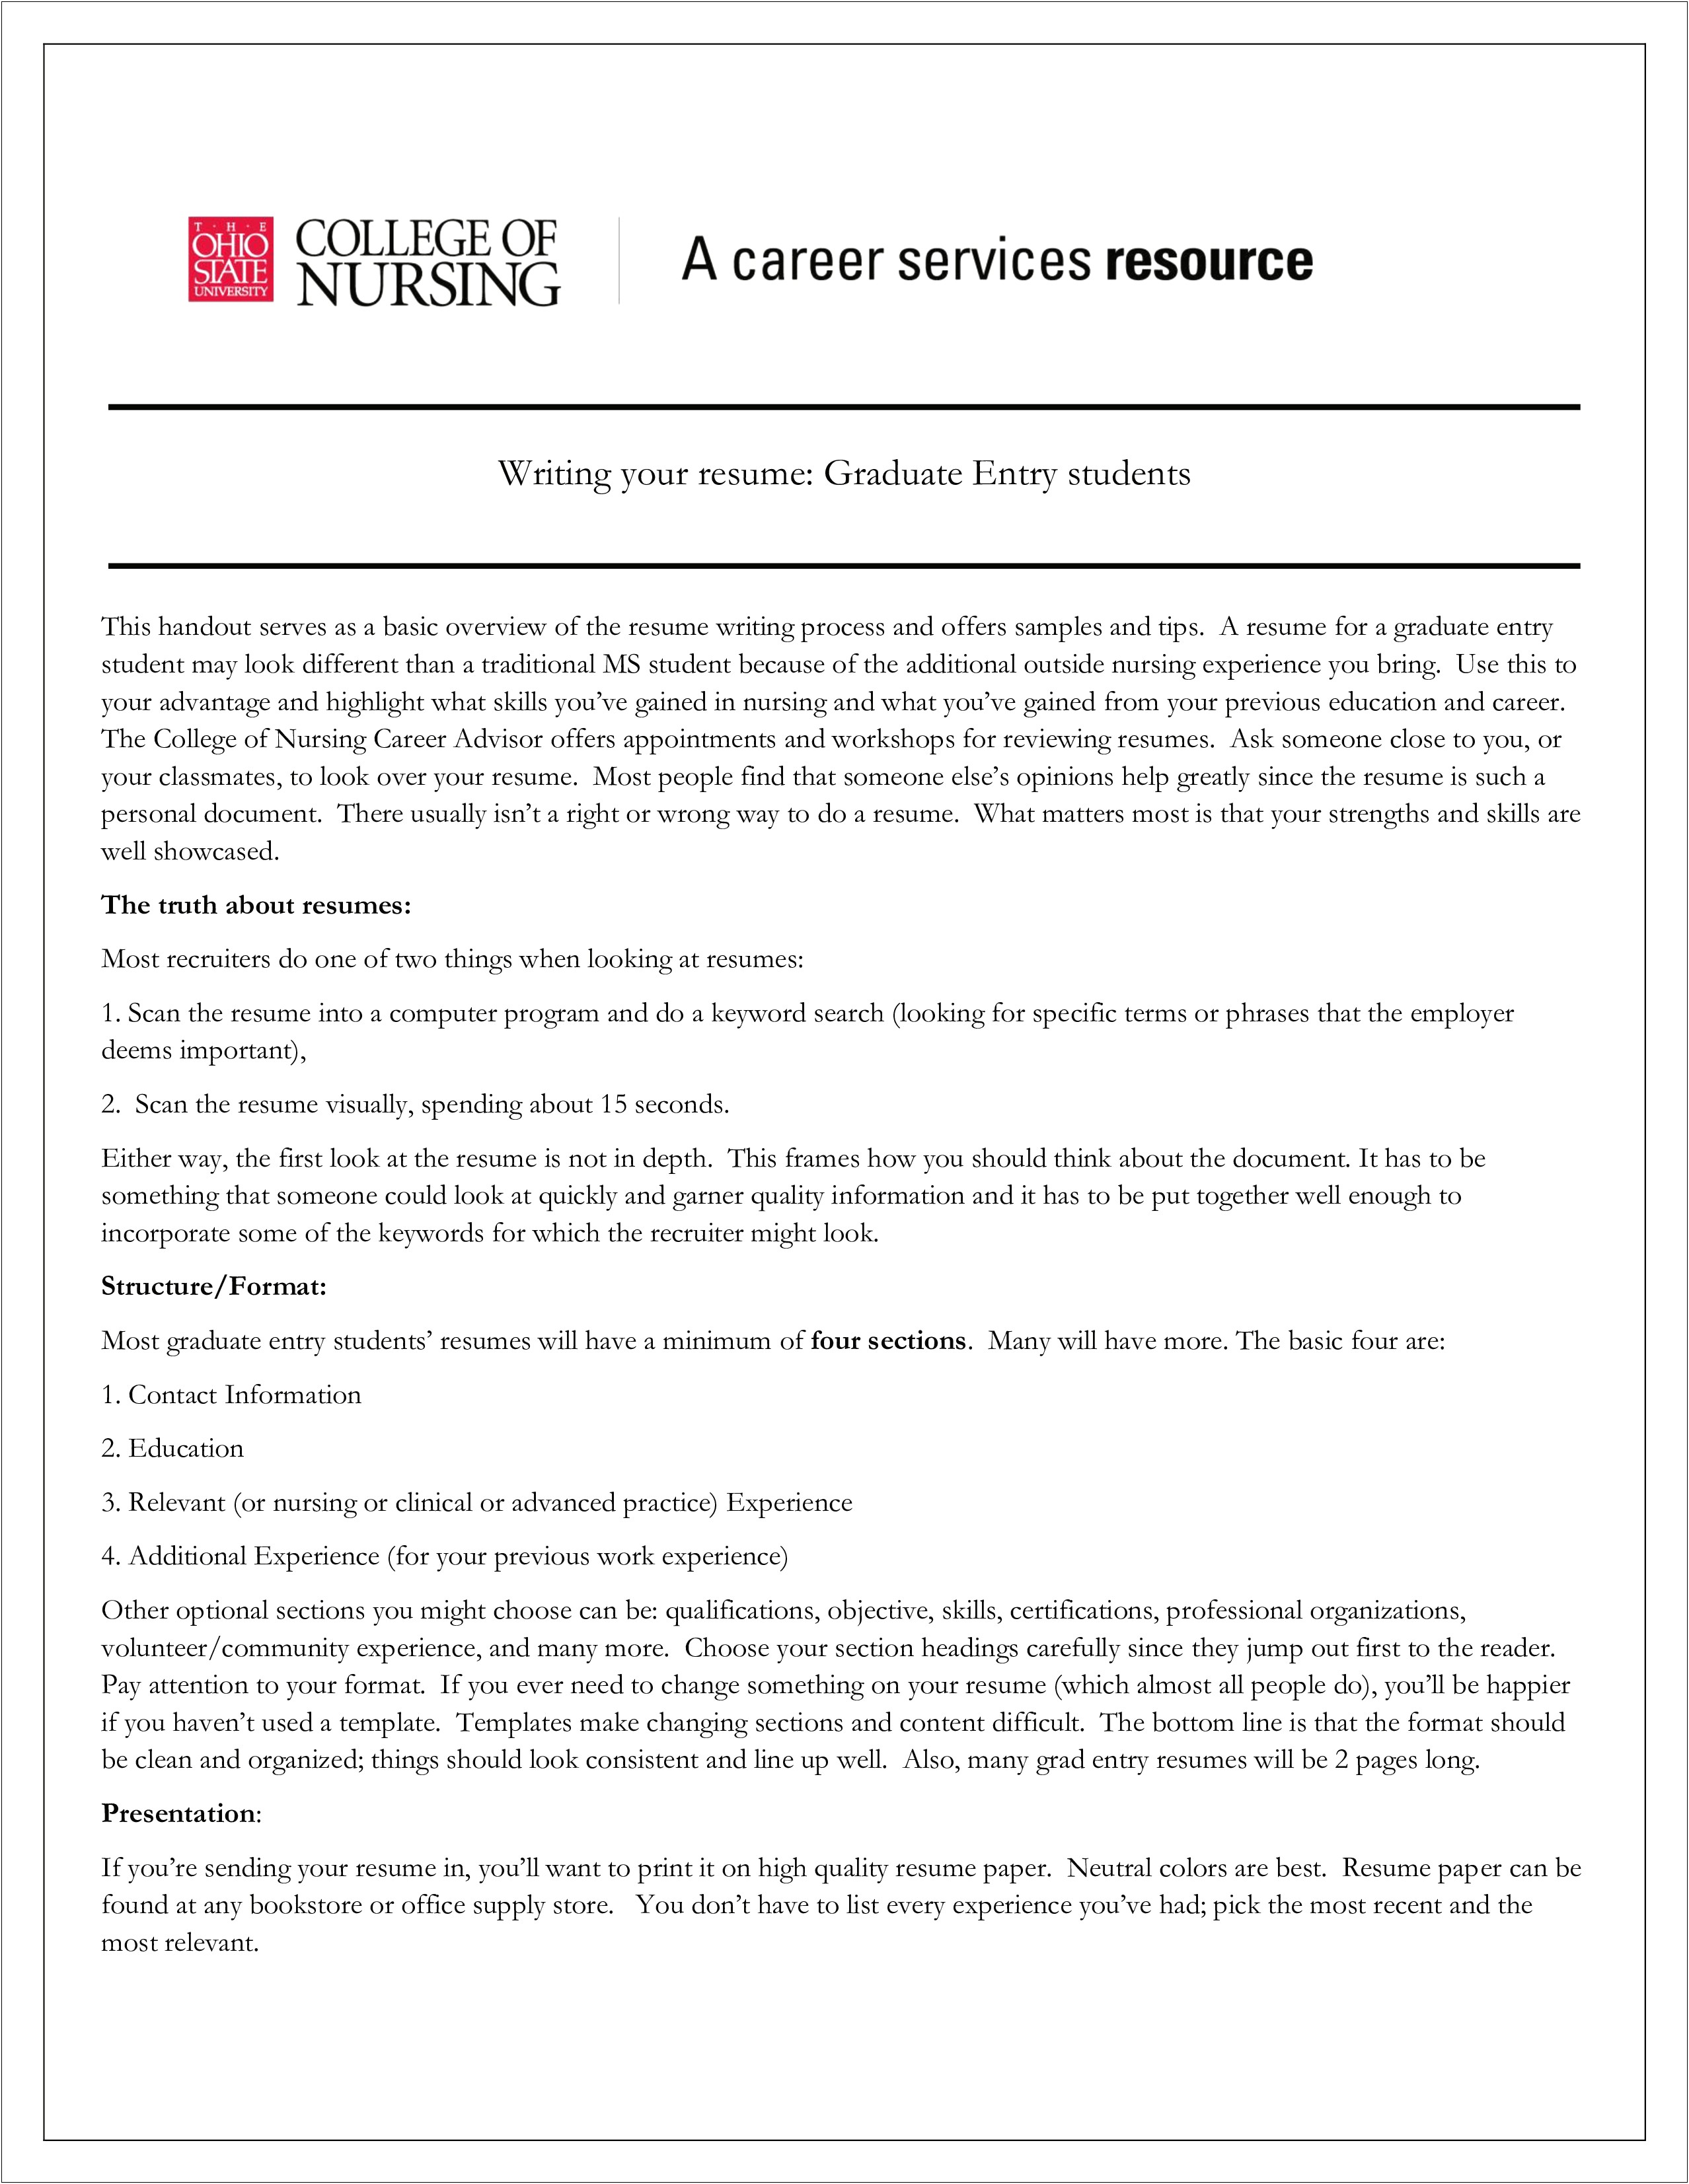 Nurse Practitioner New Grad Resume Summary